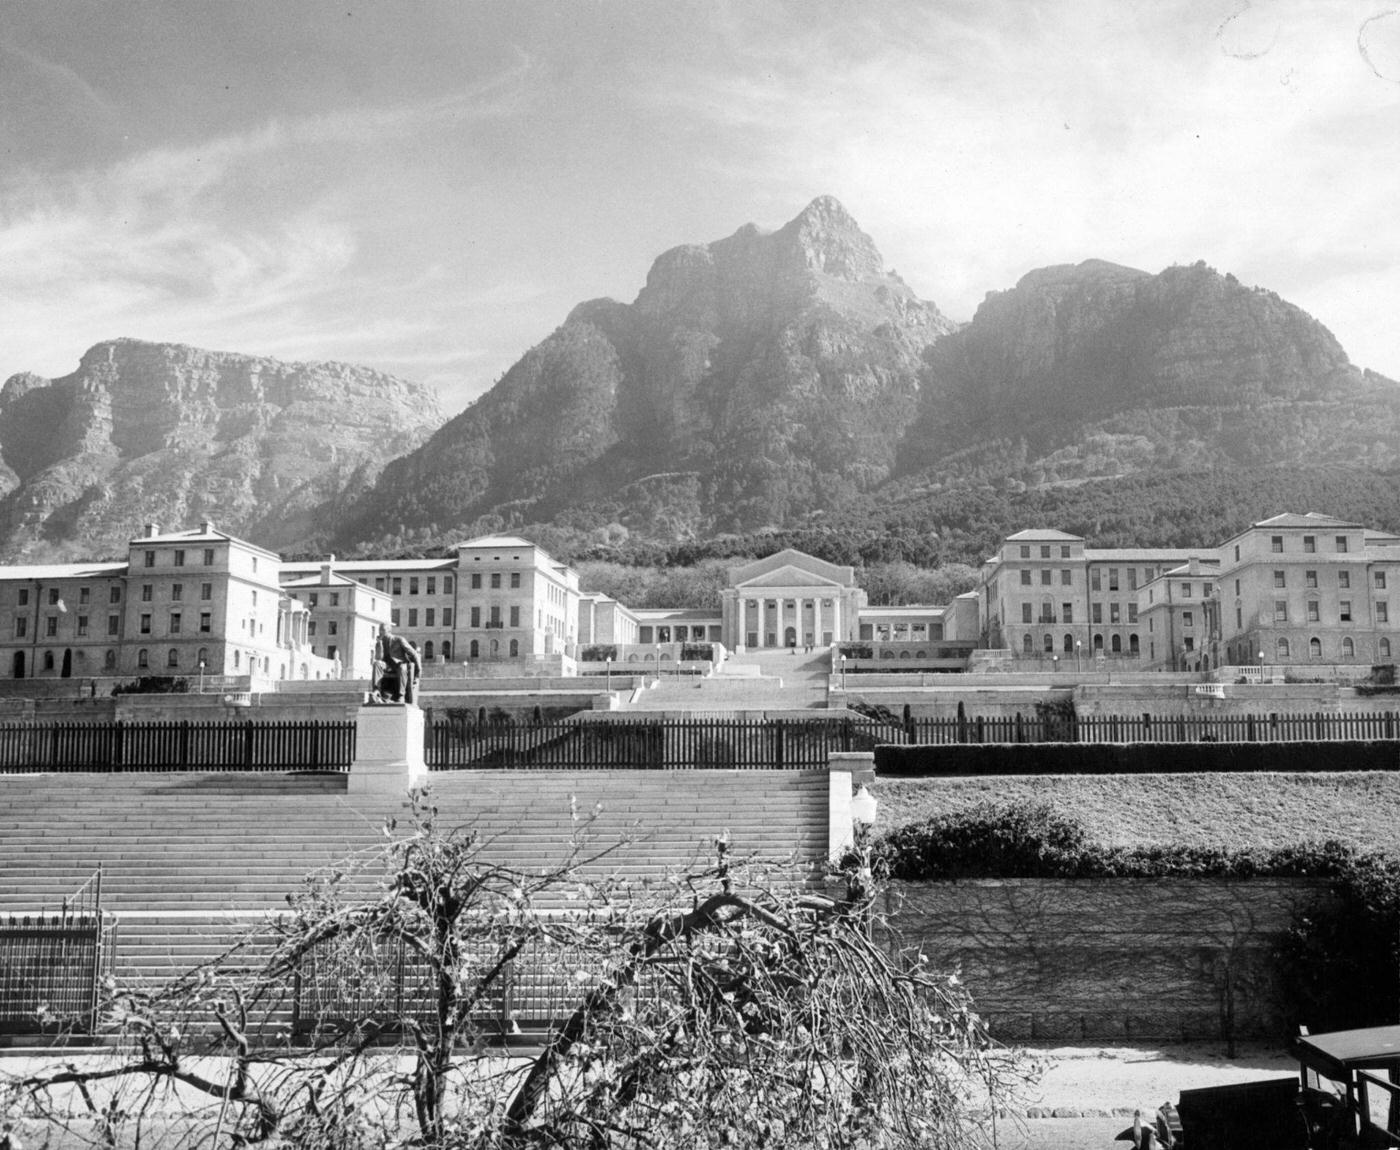 University of Cape Town, 1930